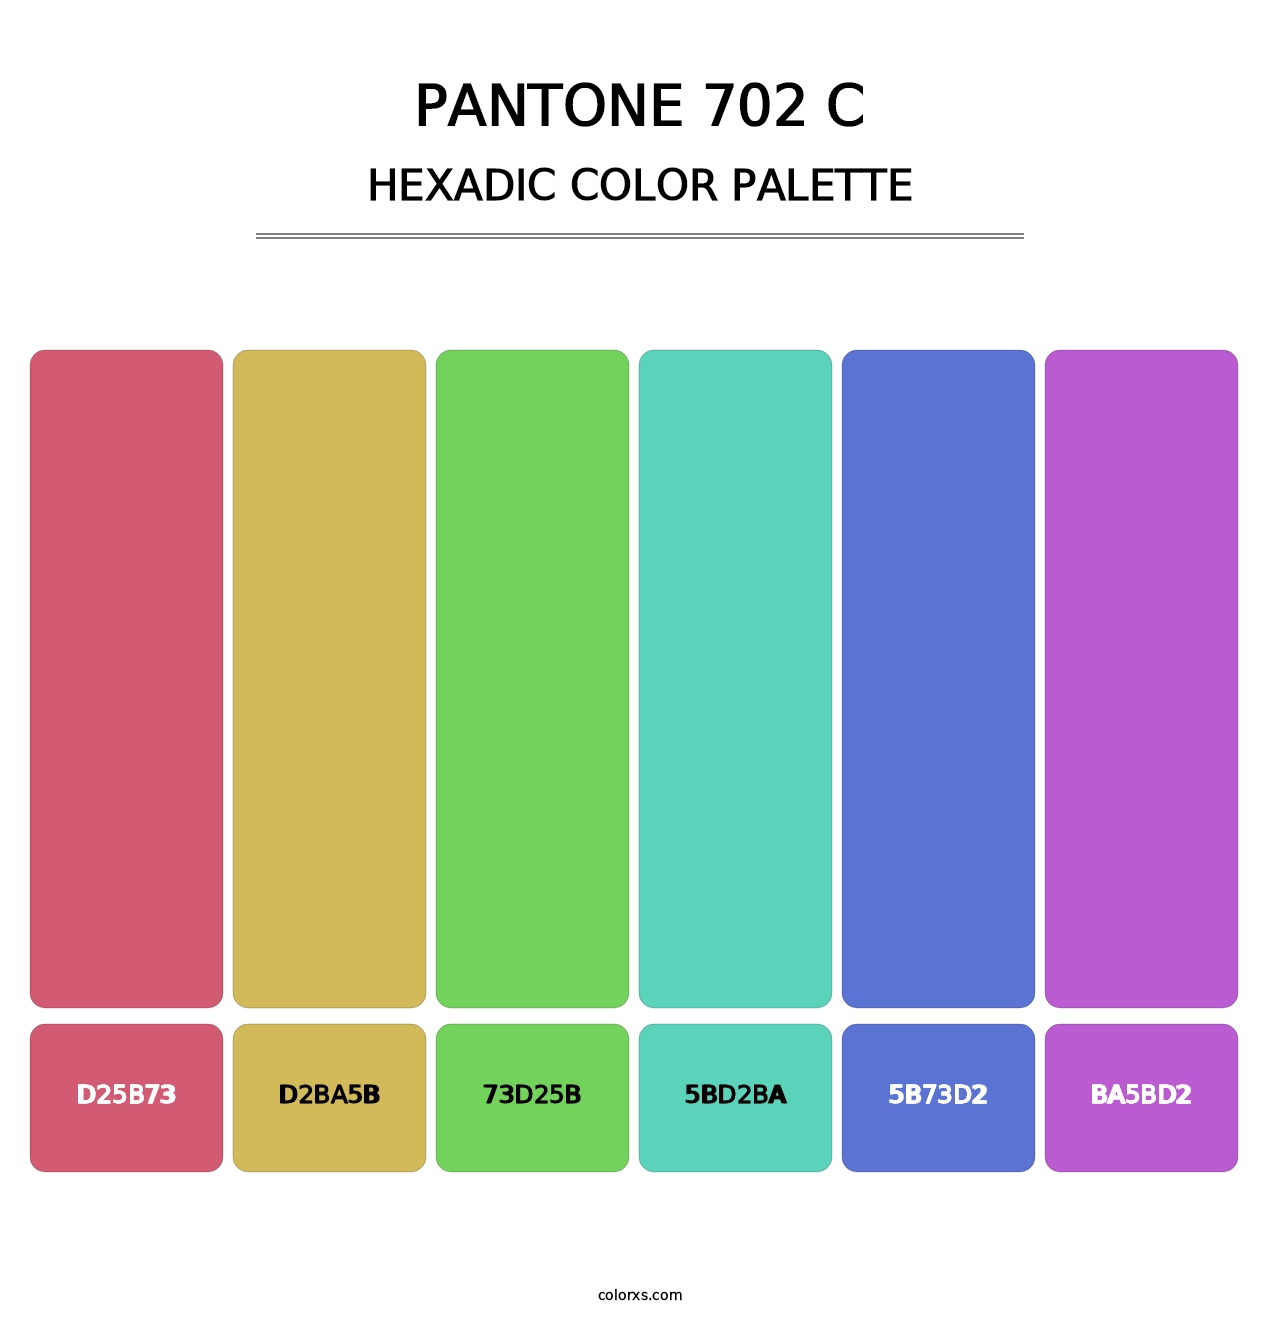 PANTONE 702 C - Hexadic Color Palette